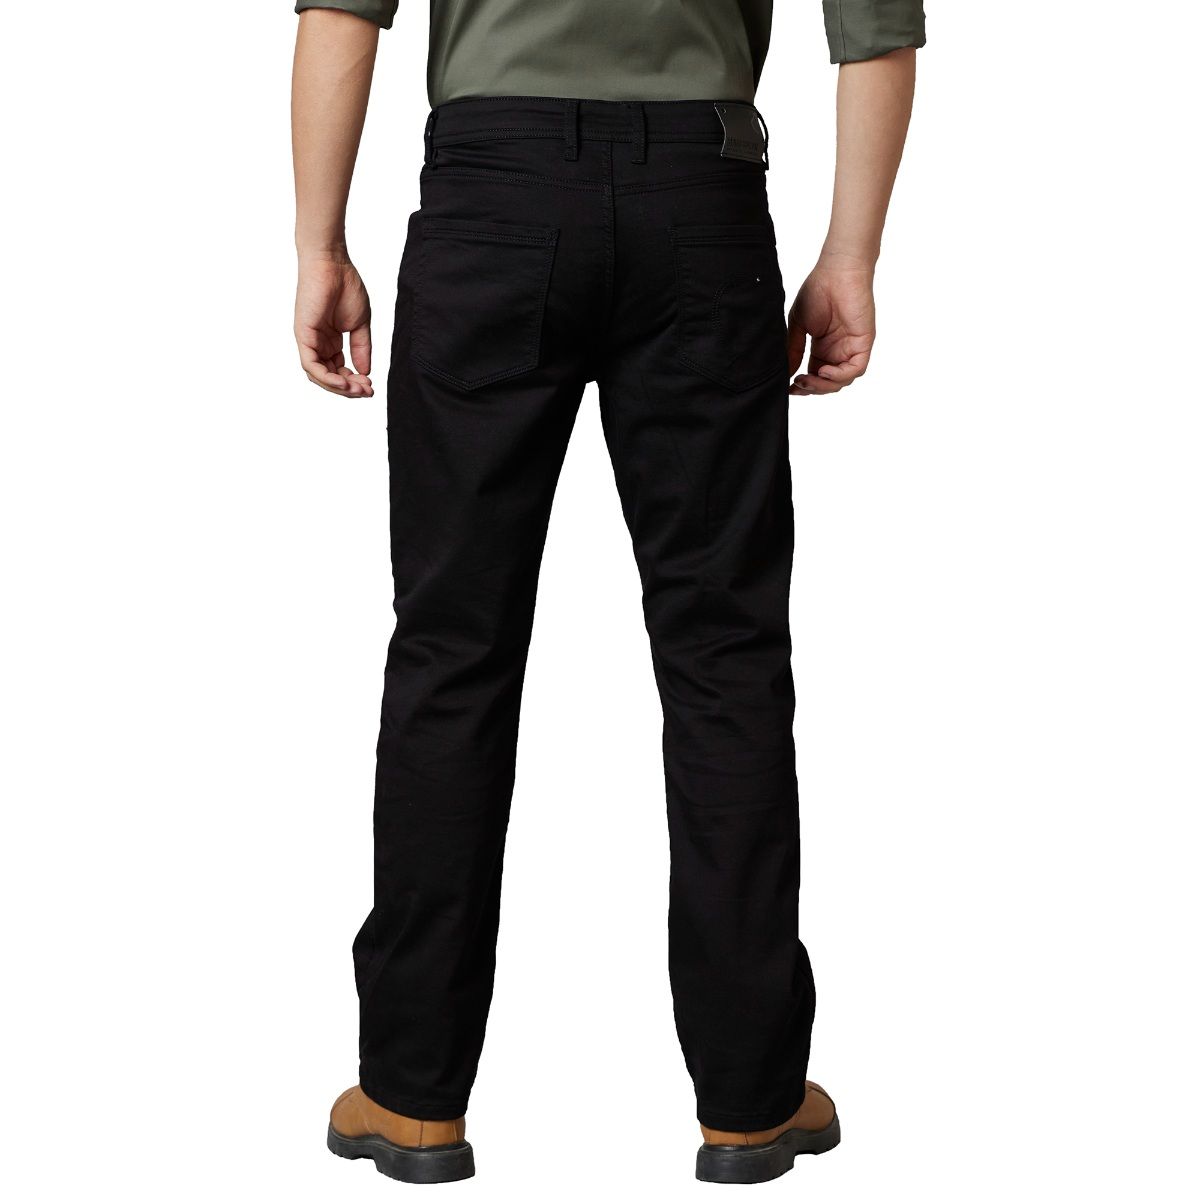 Buy Being Human Khaki Men Jeans (Size: 28)-BHDI22512-KHAKI at Amazon.in